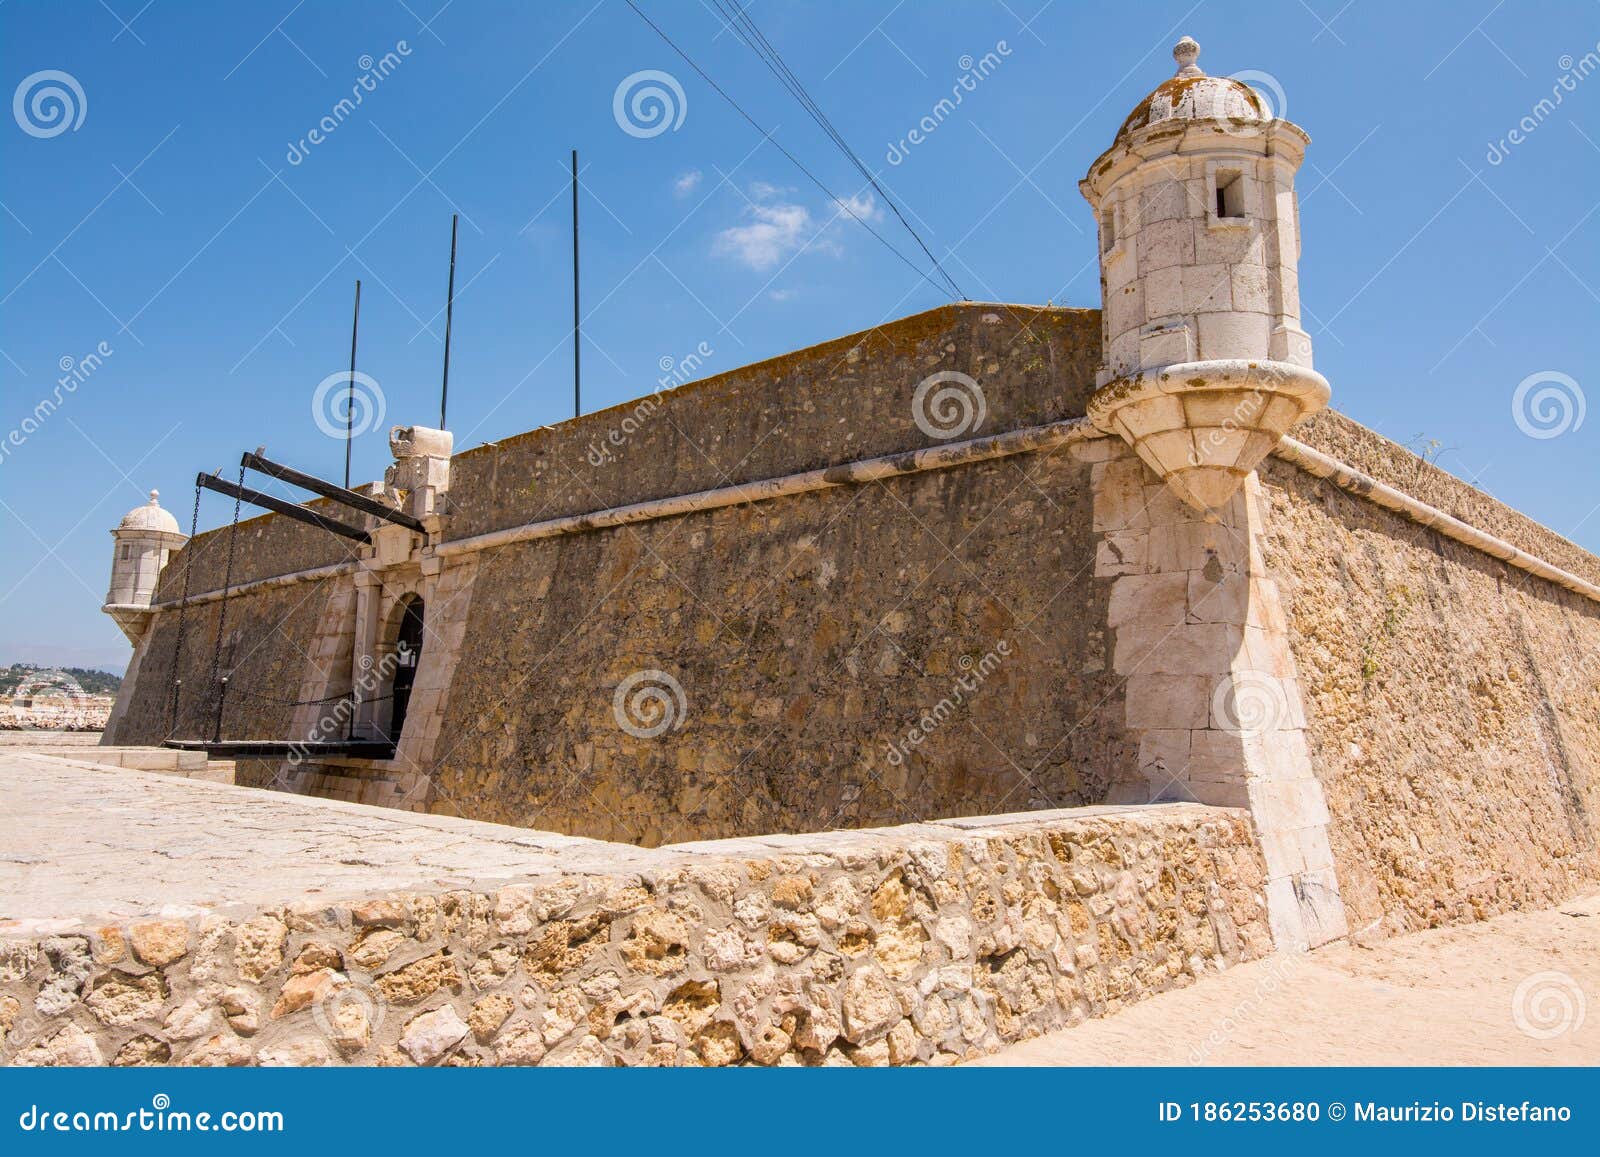 medieval forte de bandeira in lagos portugal